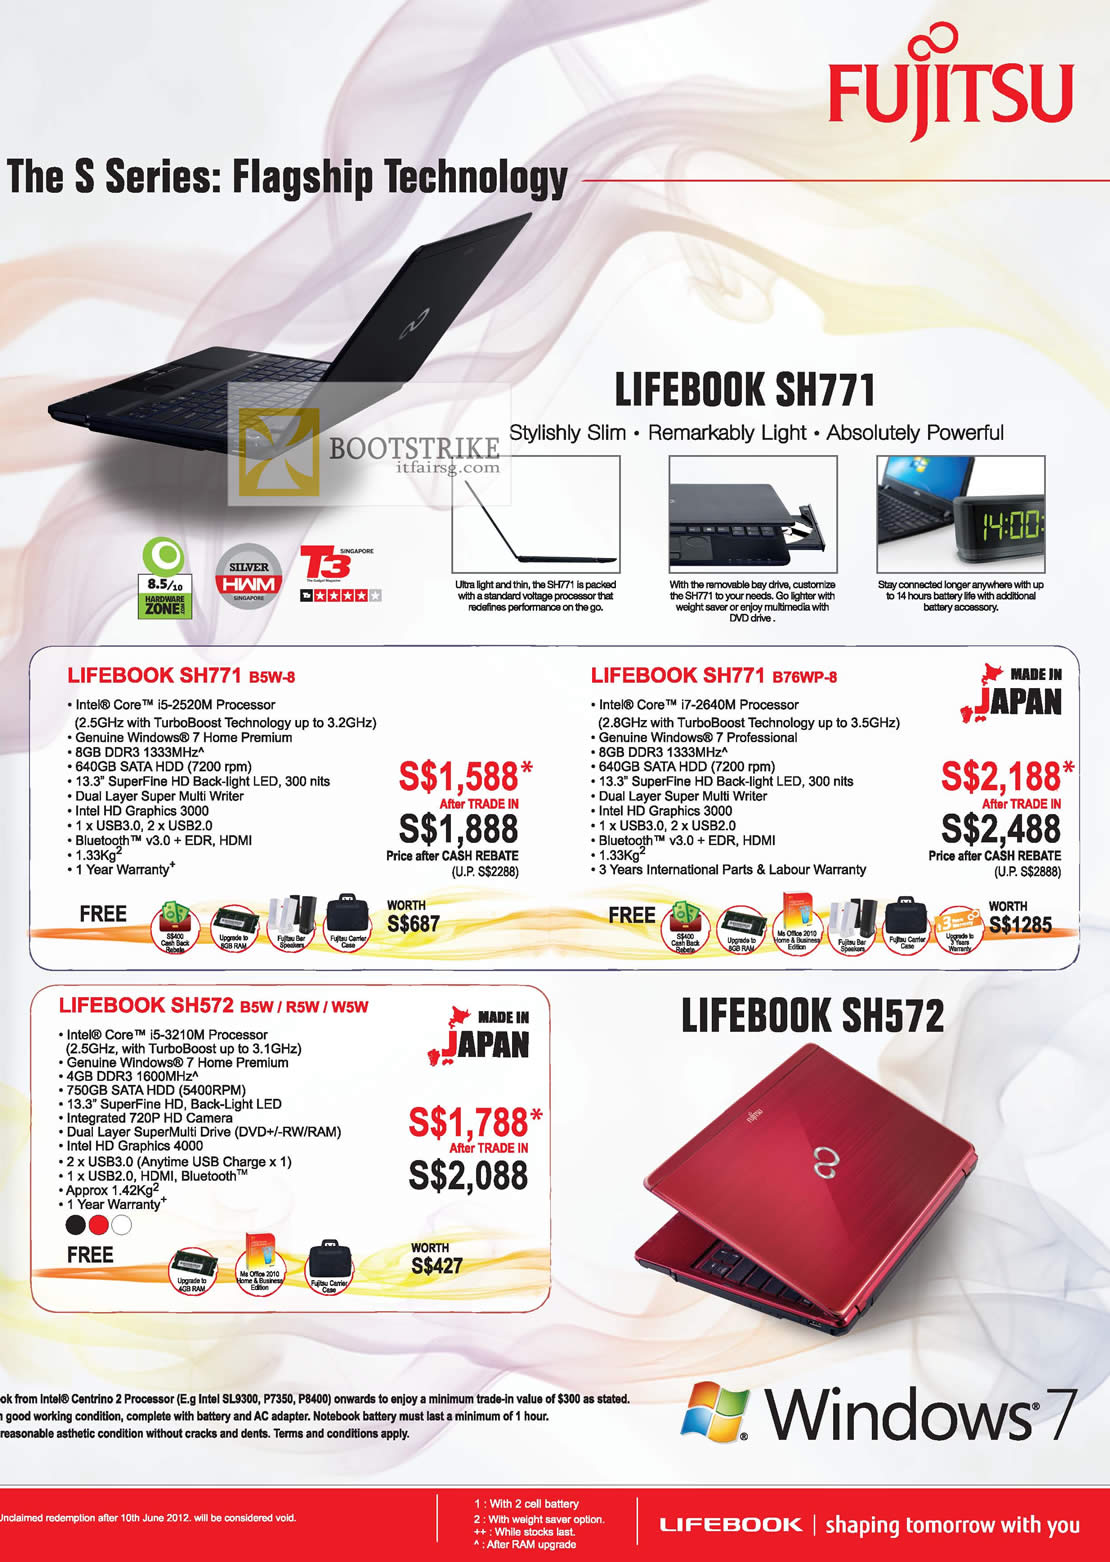 PC SHOW 2012 price list image brochure of Fujitsu Notebooks Lifebook SH771 B5W-8, SH771 B76WP-8, SH572 B5W R5W W5W